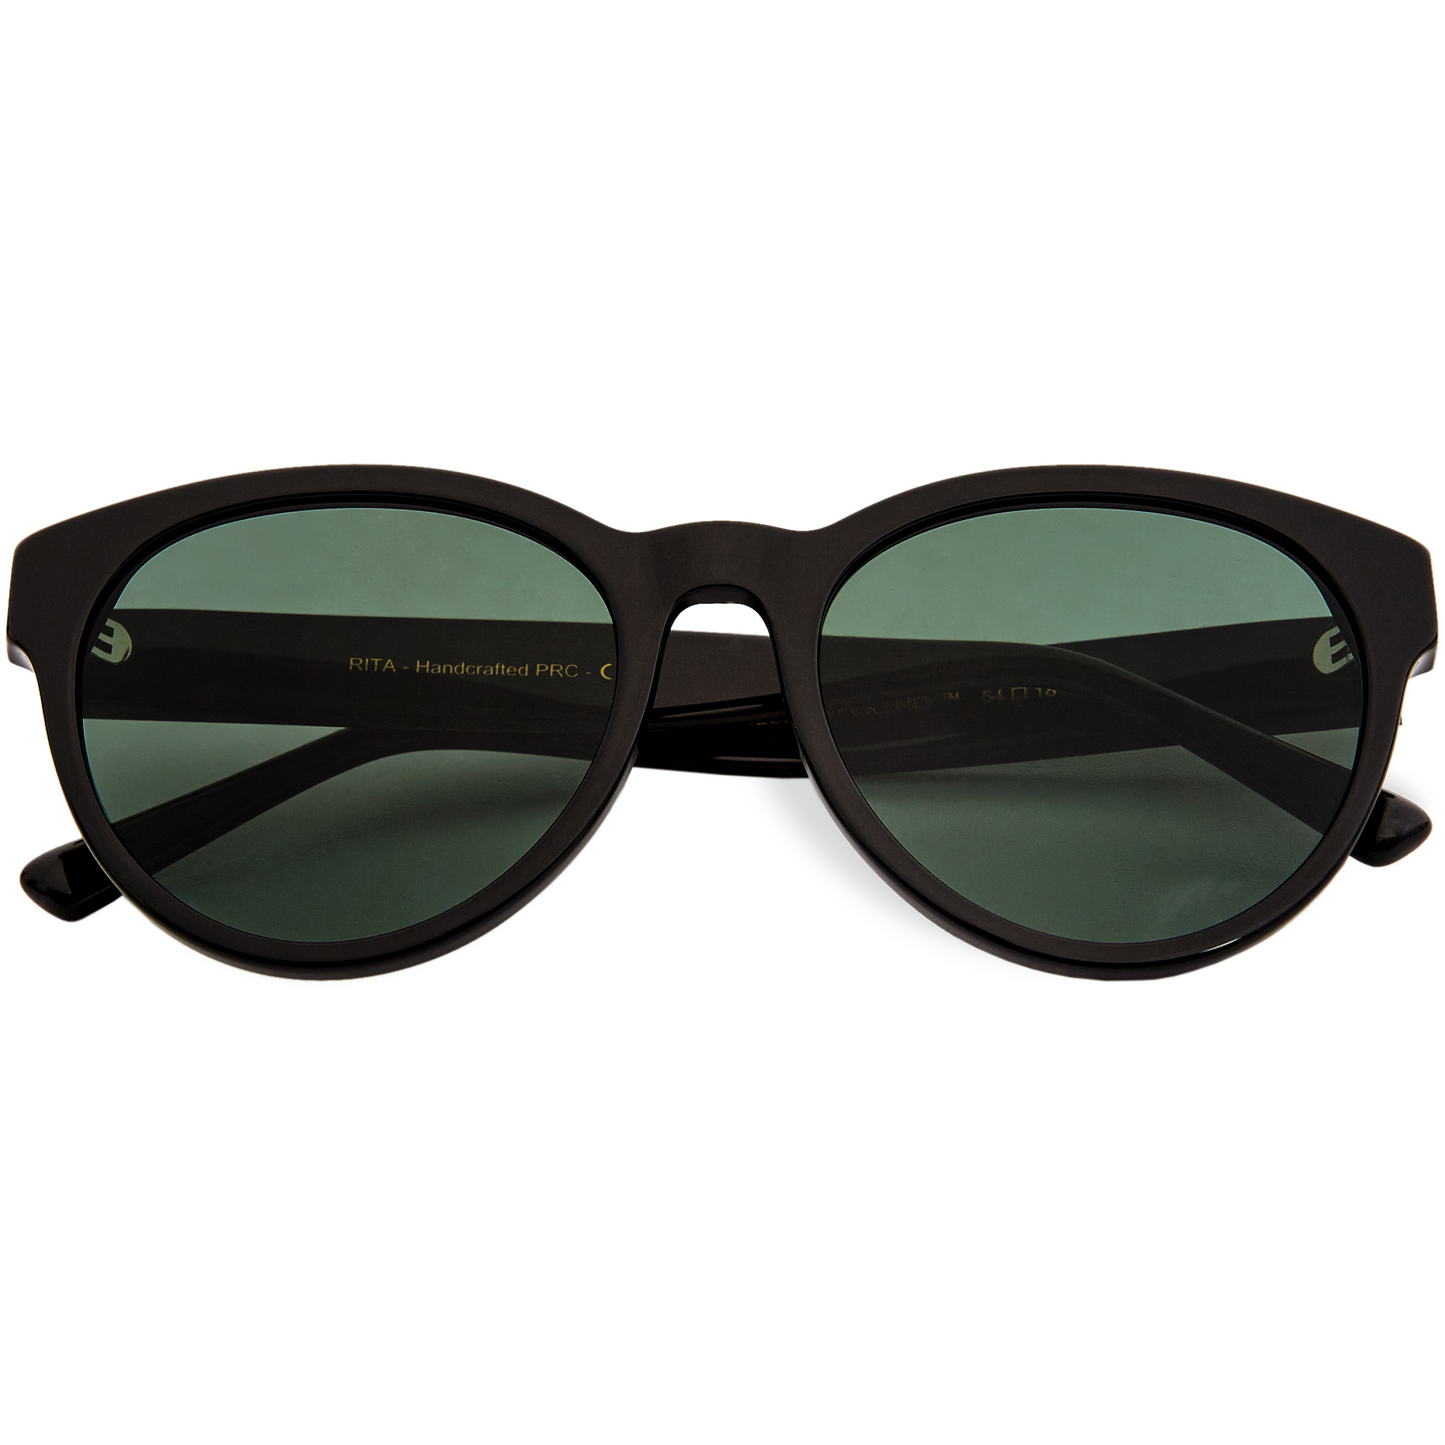 Messyweekend Sunglasses Rita, Black/Green